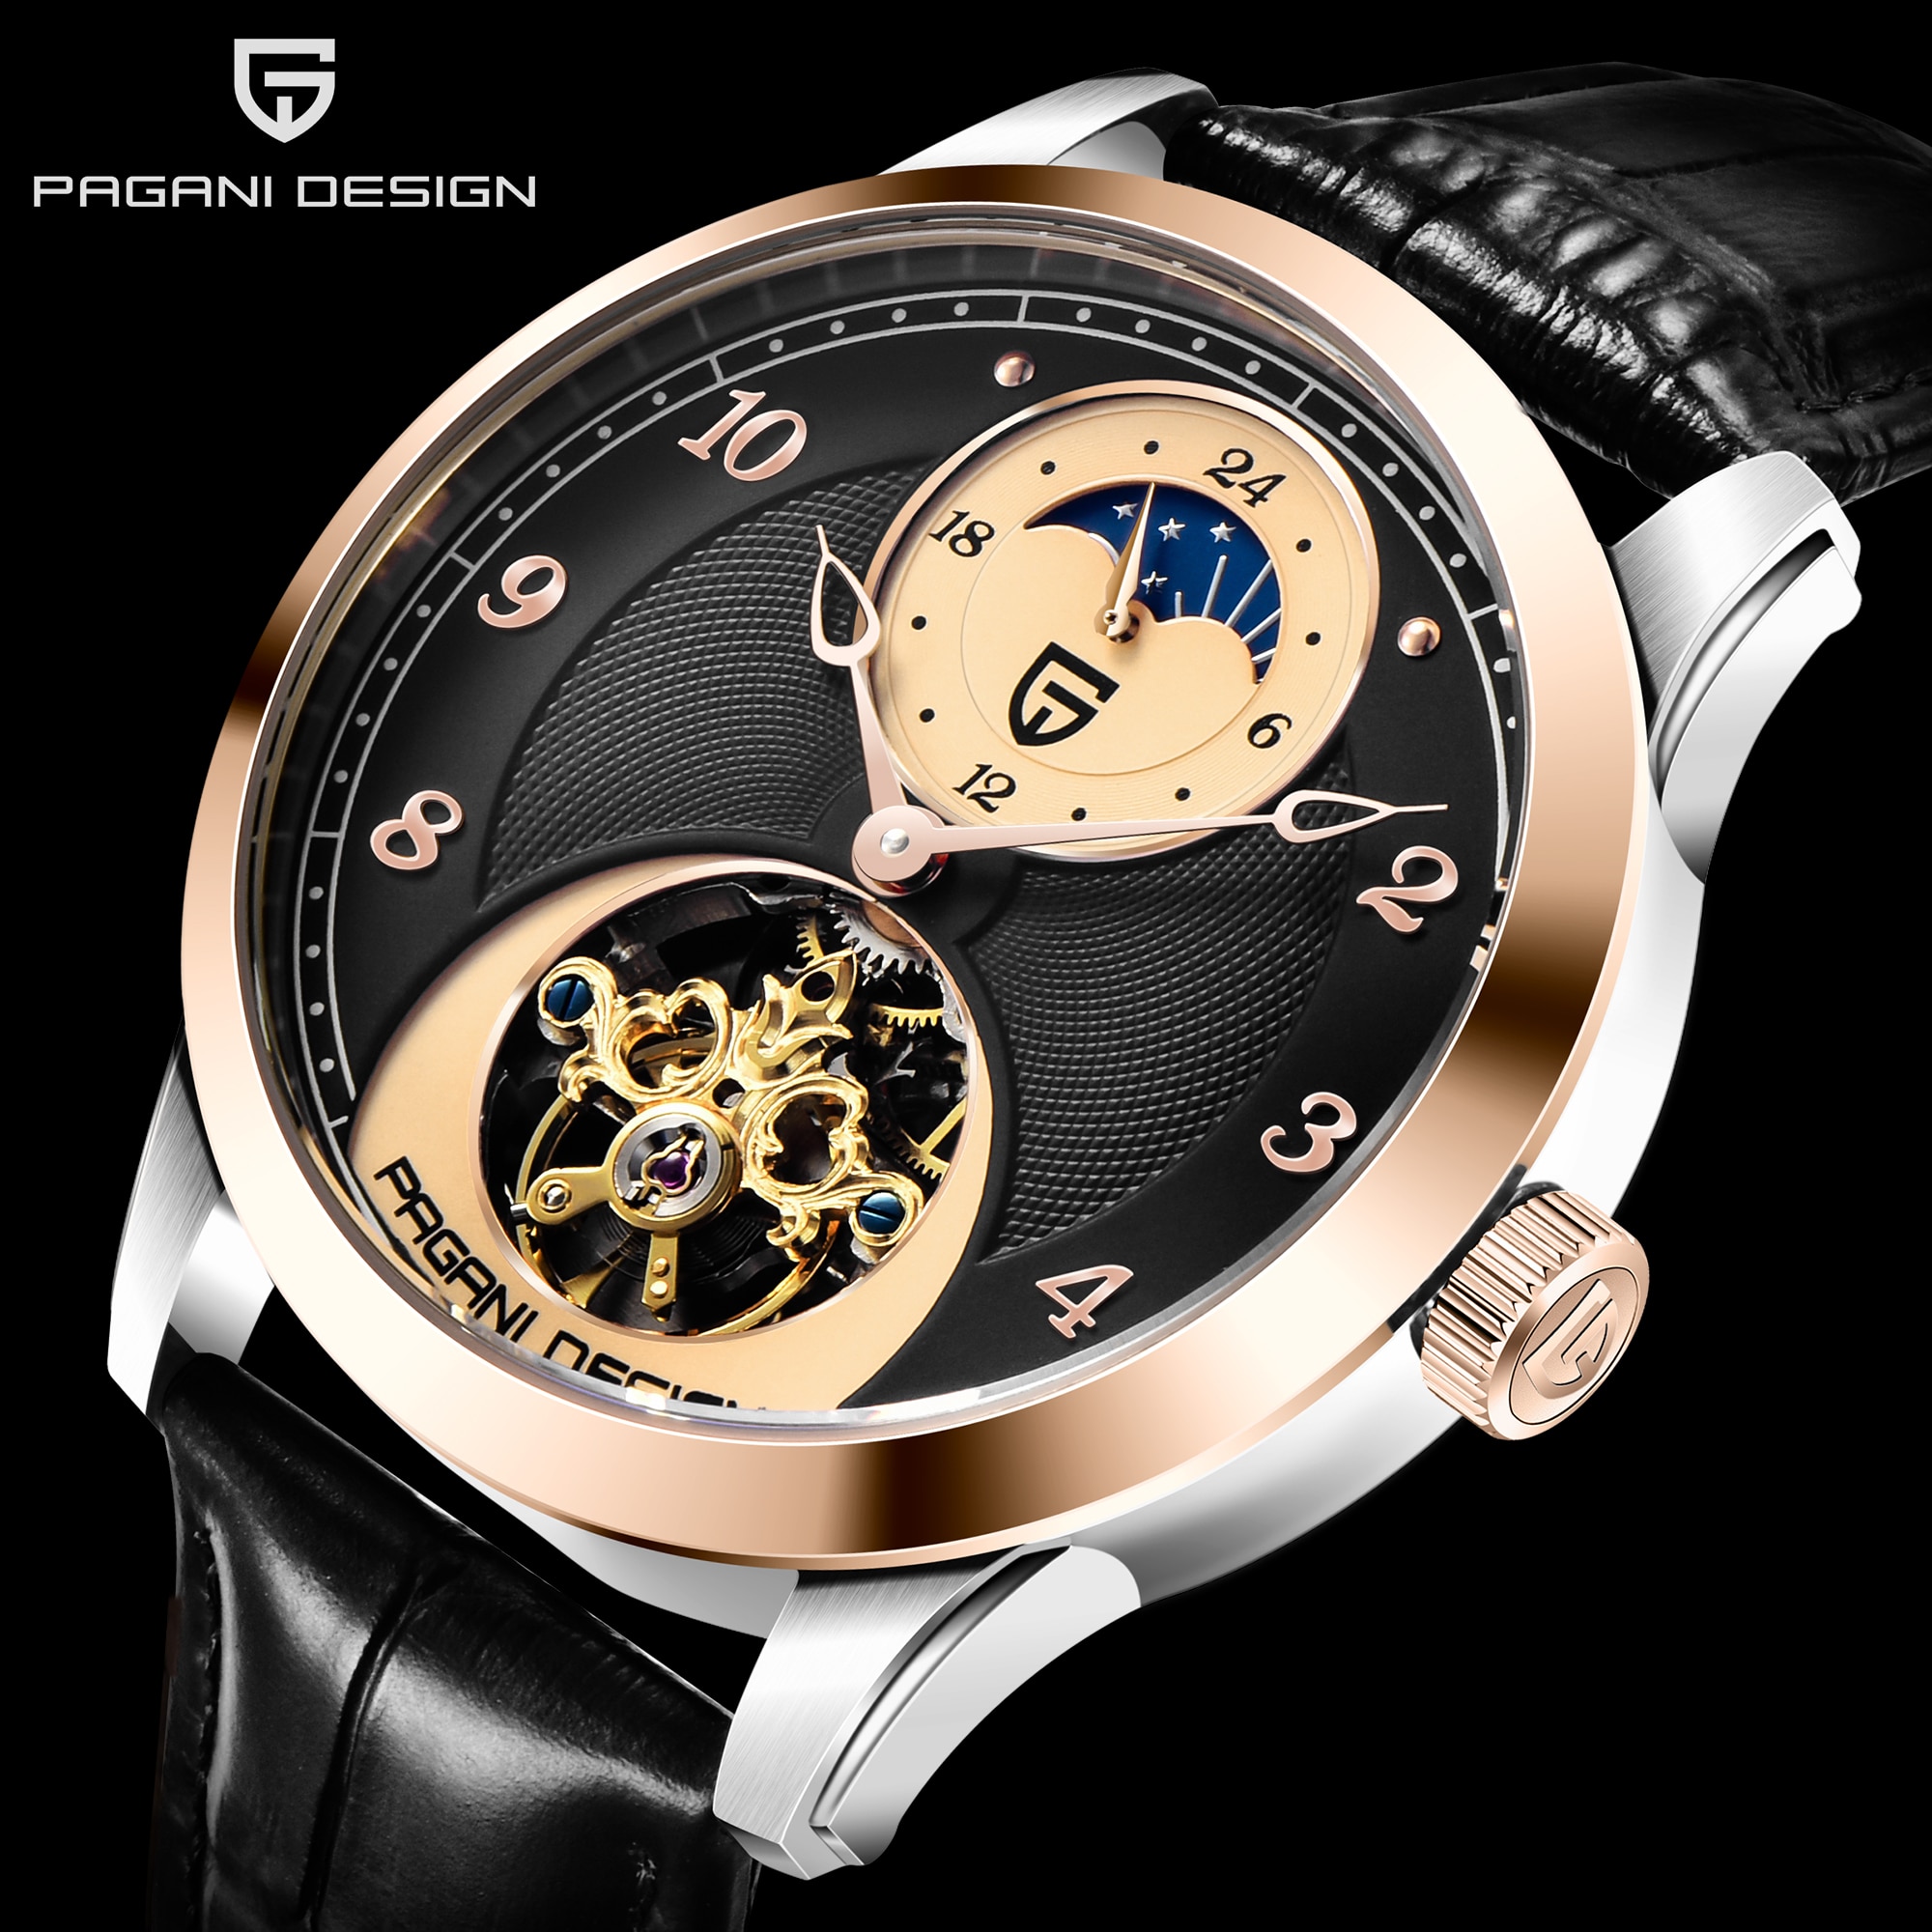 Reloj de pulsera mecánico de lujo para hombre, cronógrafo con correa de cuero, color oro rosa árabe, zafiro automático